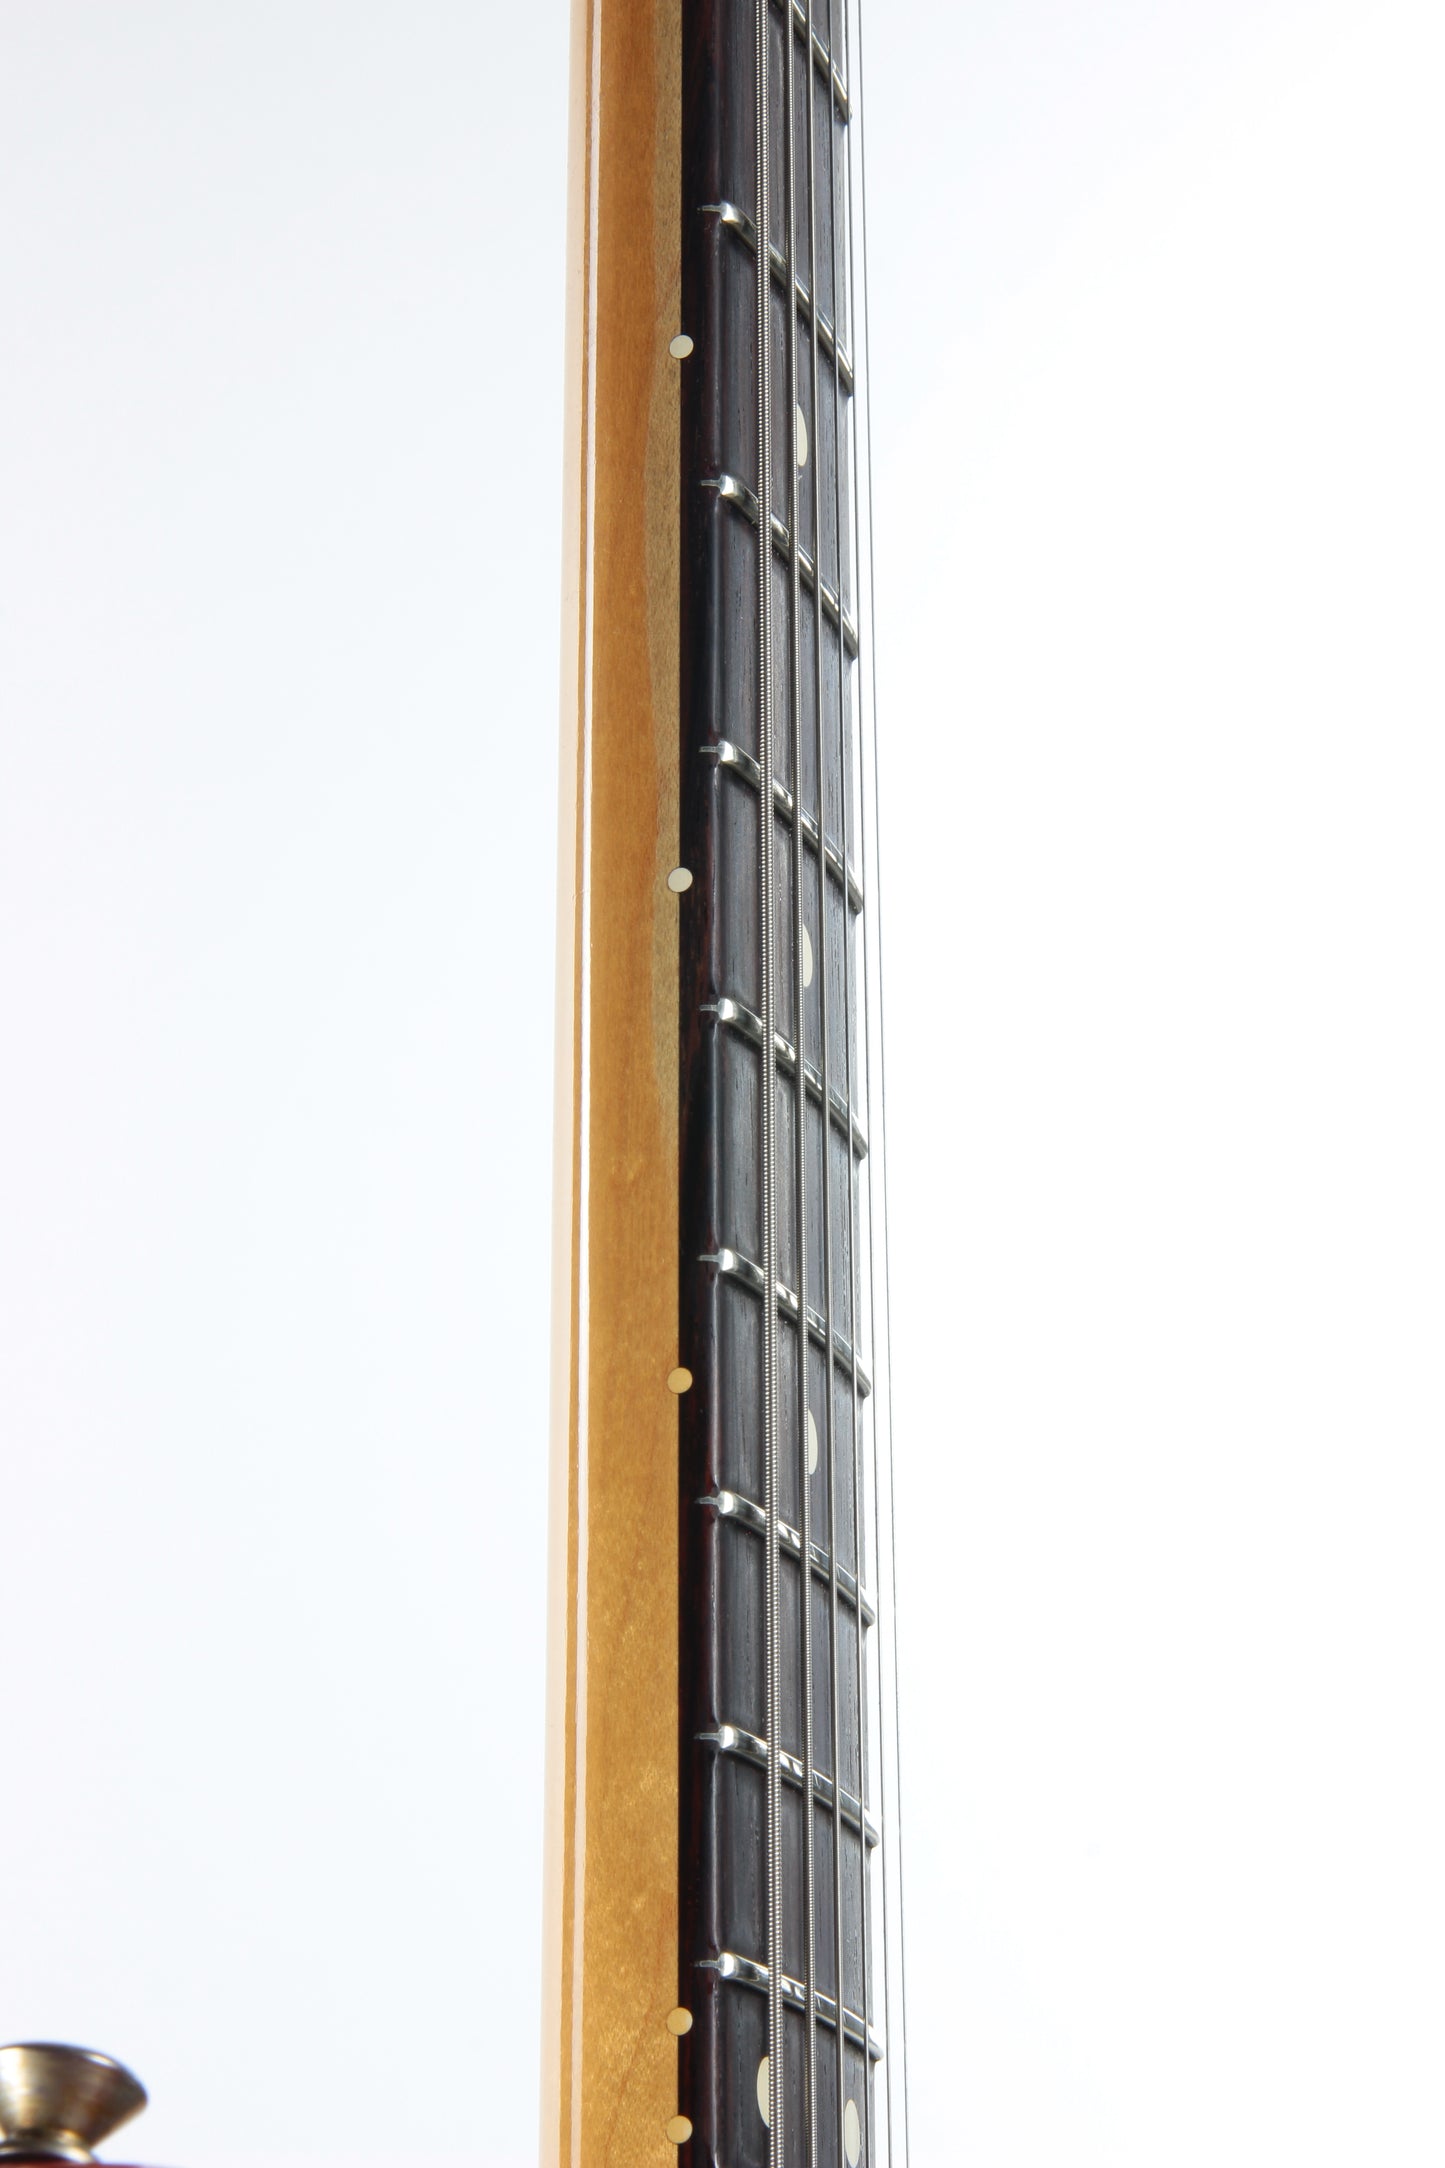 Fender Custom Shop Brazilian Rosewood Masterbuilt '59 Stratocaster Relic - John Cruz Pickups, English Neck, Jason Smith WW 10 Wildwood